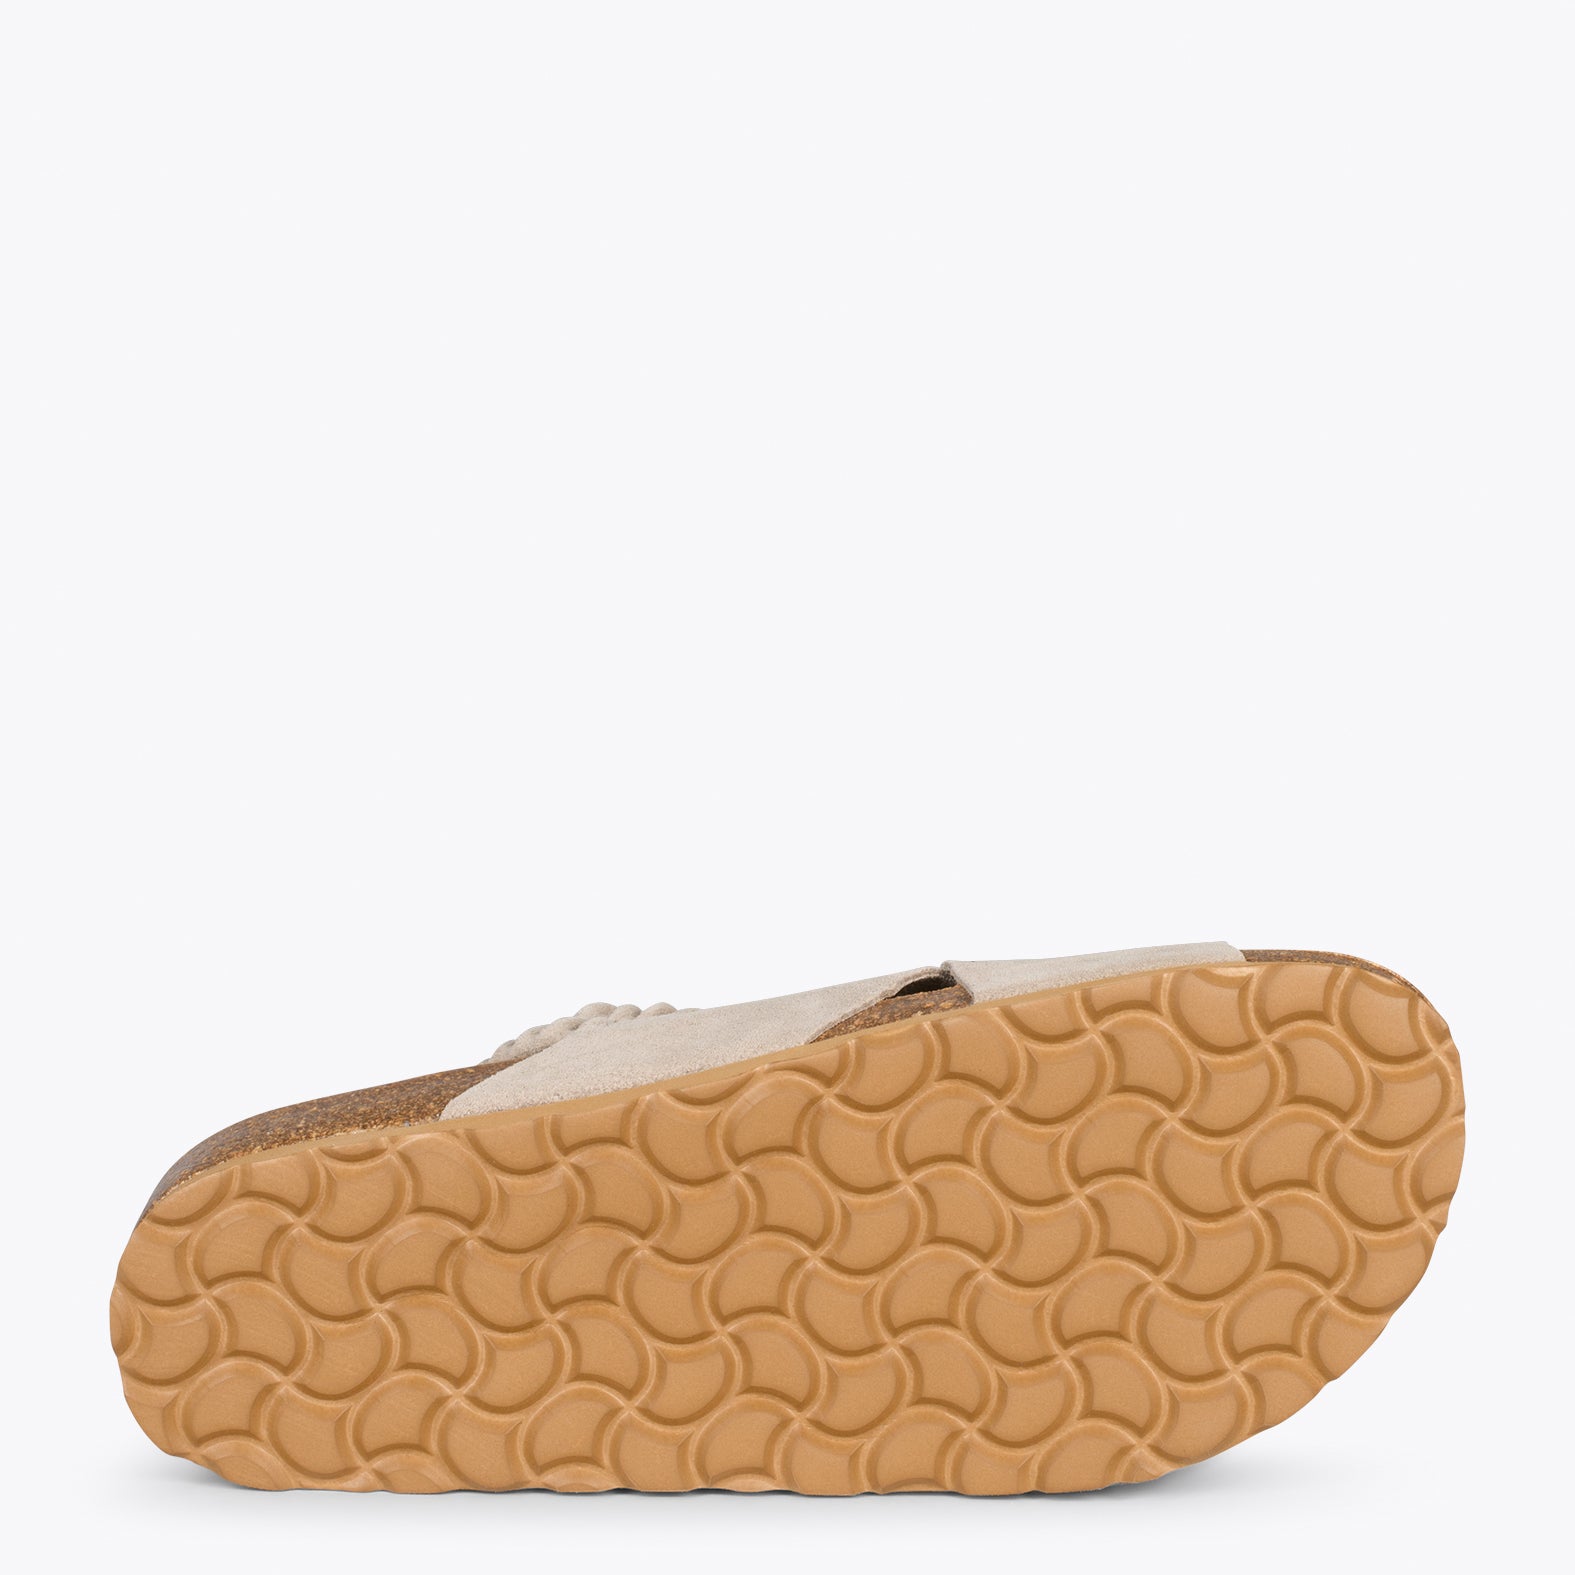 PALMERA – TAUPE bio sandal with elastic band